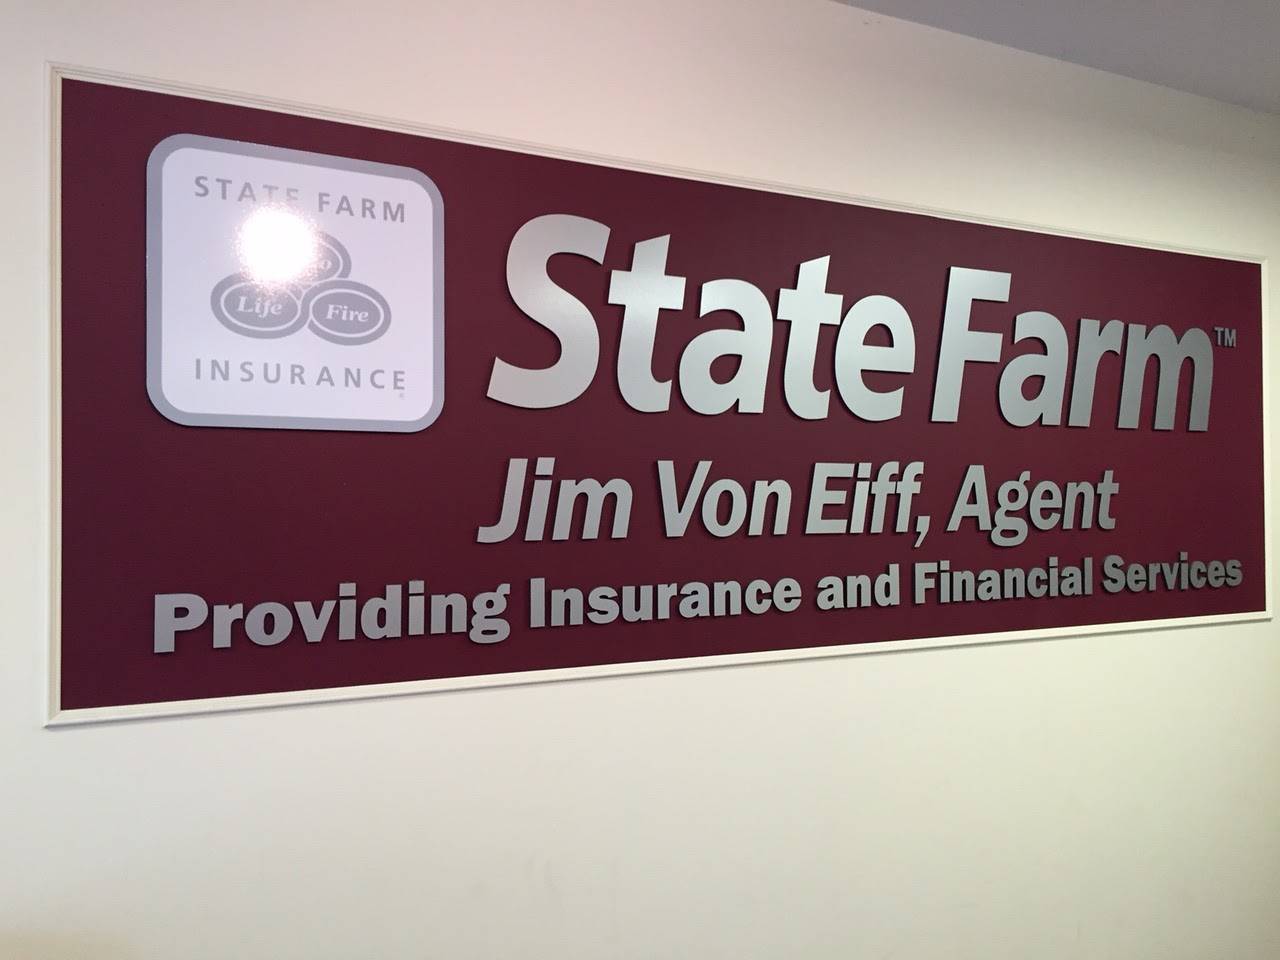 Photo of State Farm: Jim Von Eiff in Maspeth City, New York, United States - 3 Picture of Point of interest, Establishment, Finance, Health, Insurance agency